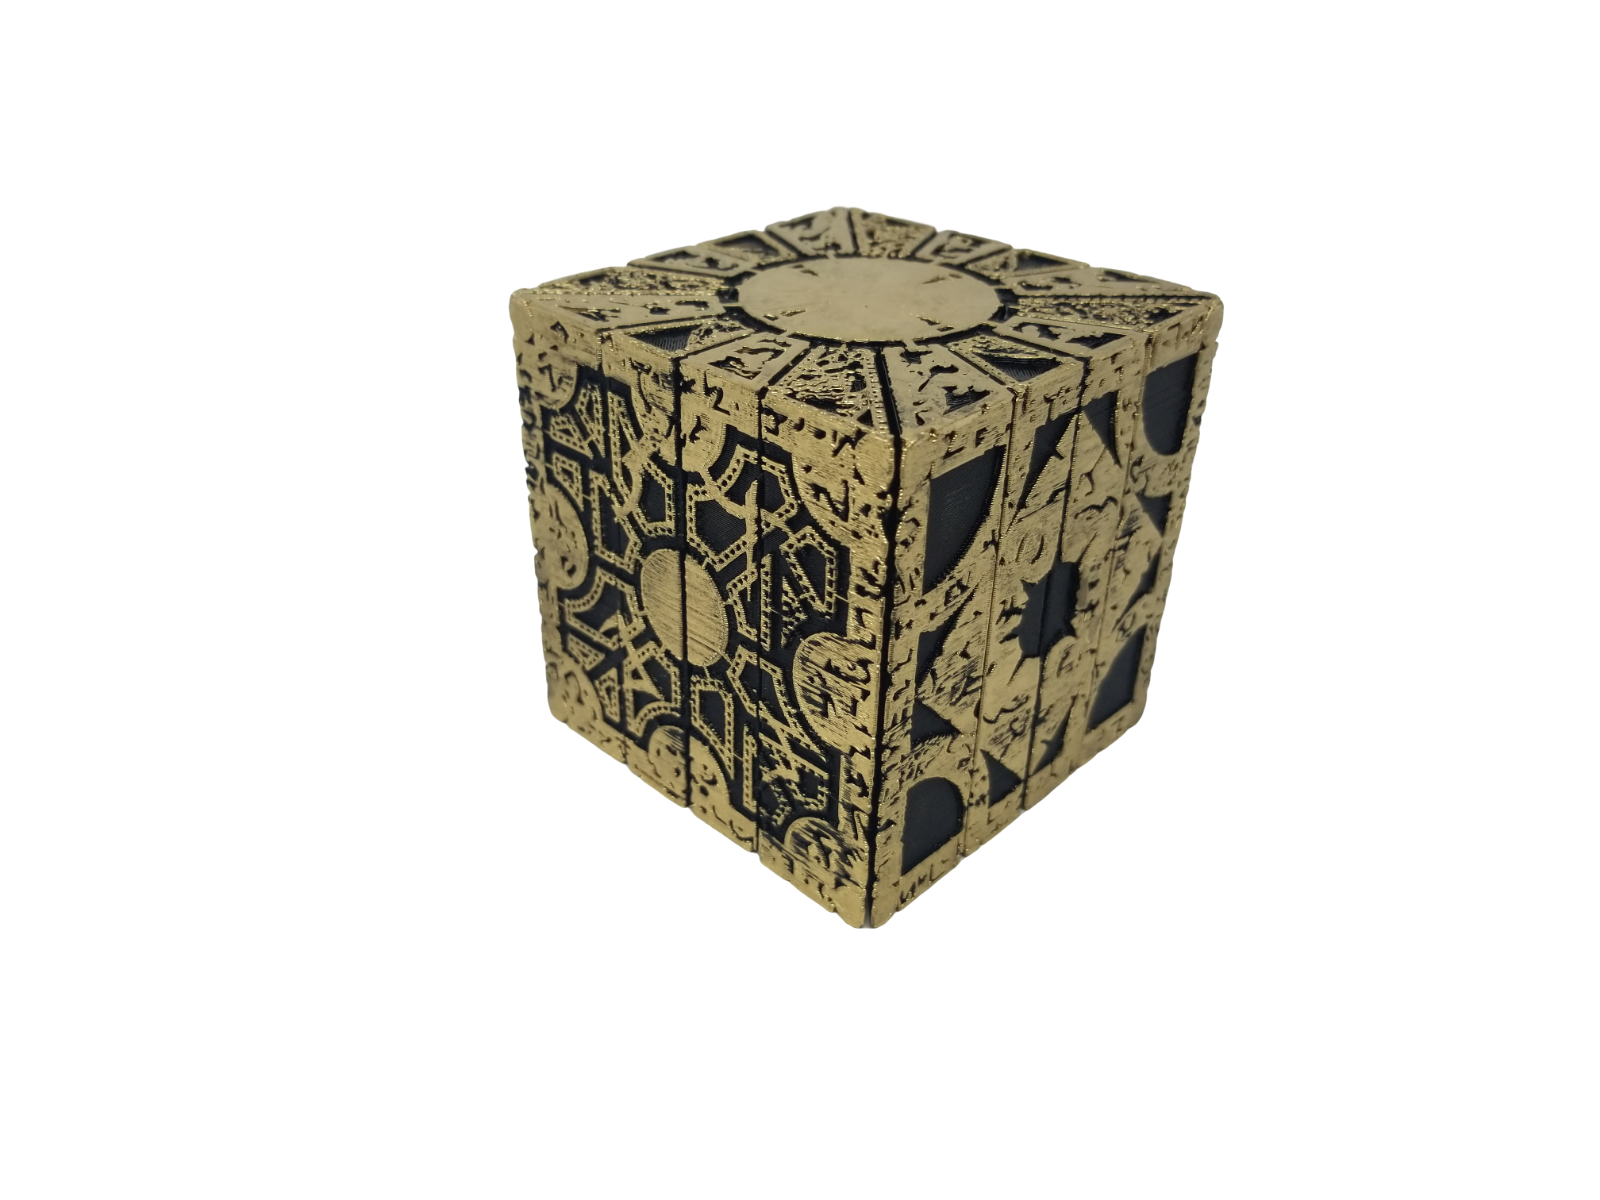 Hellraiser Cube Puzzle Box Lament Configuration  Functional Pinhead Prop Horror  Без бренда